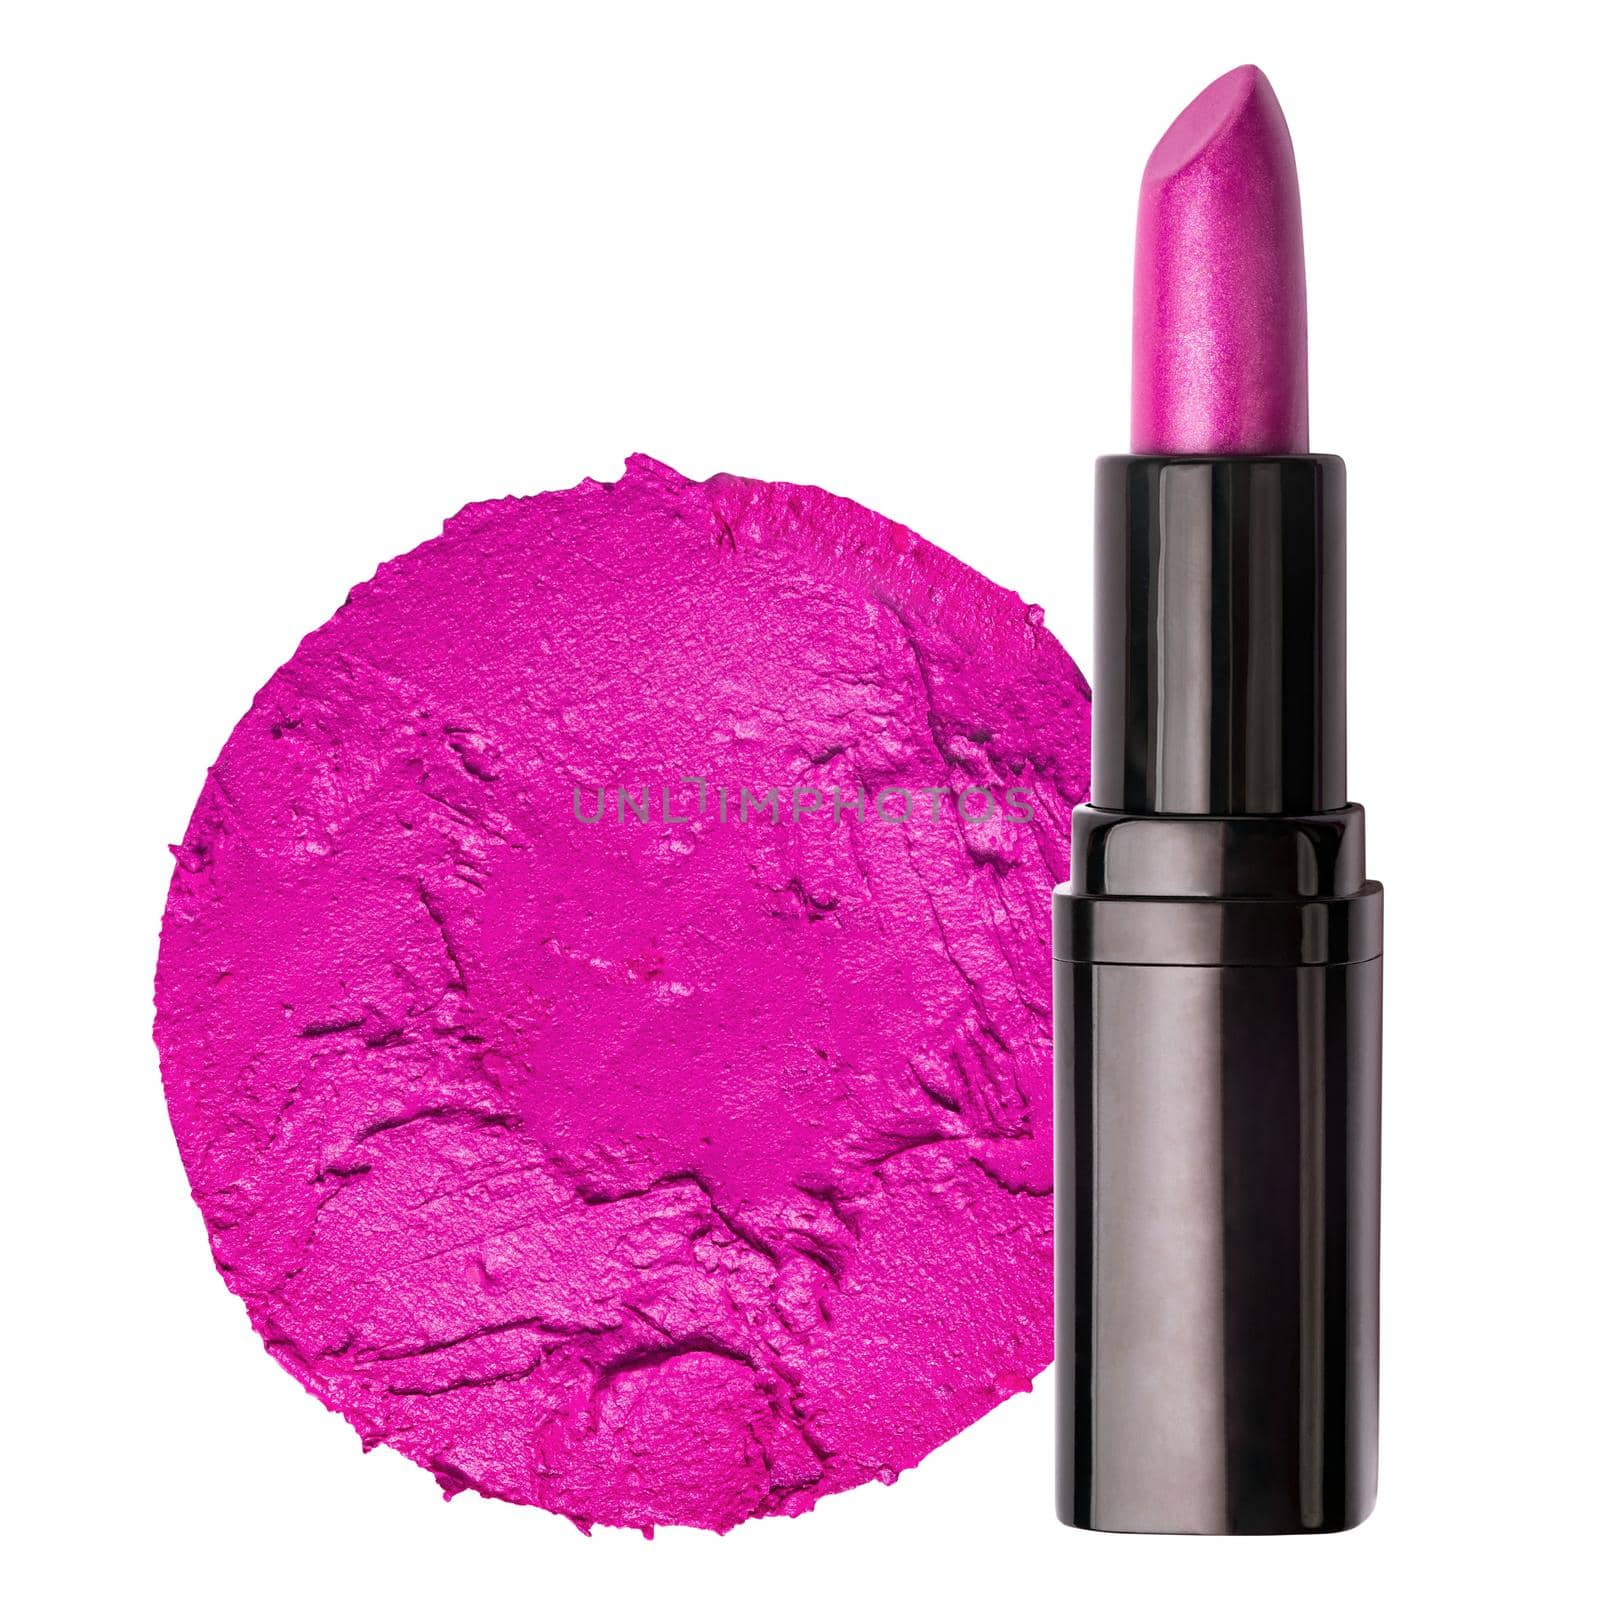 Purple lipstick with a lipstick swatch isolated on a white background by dmitryz